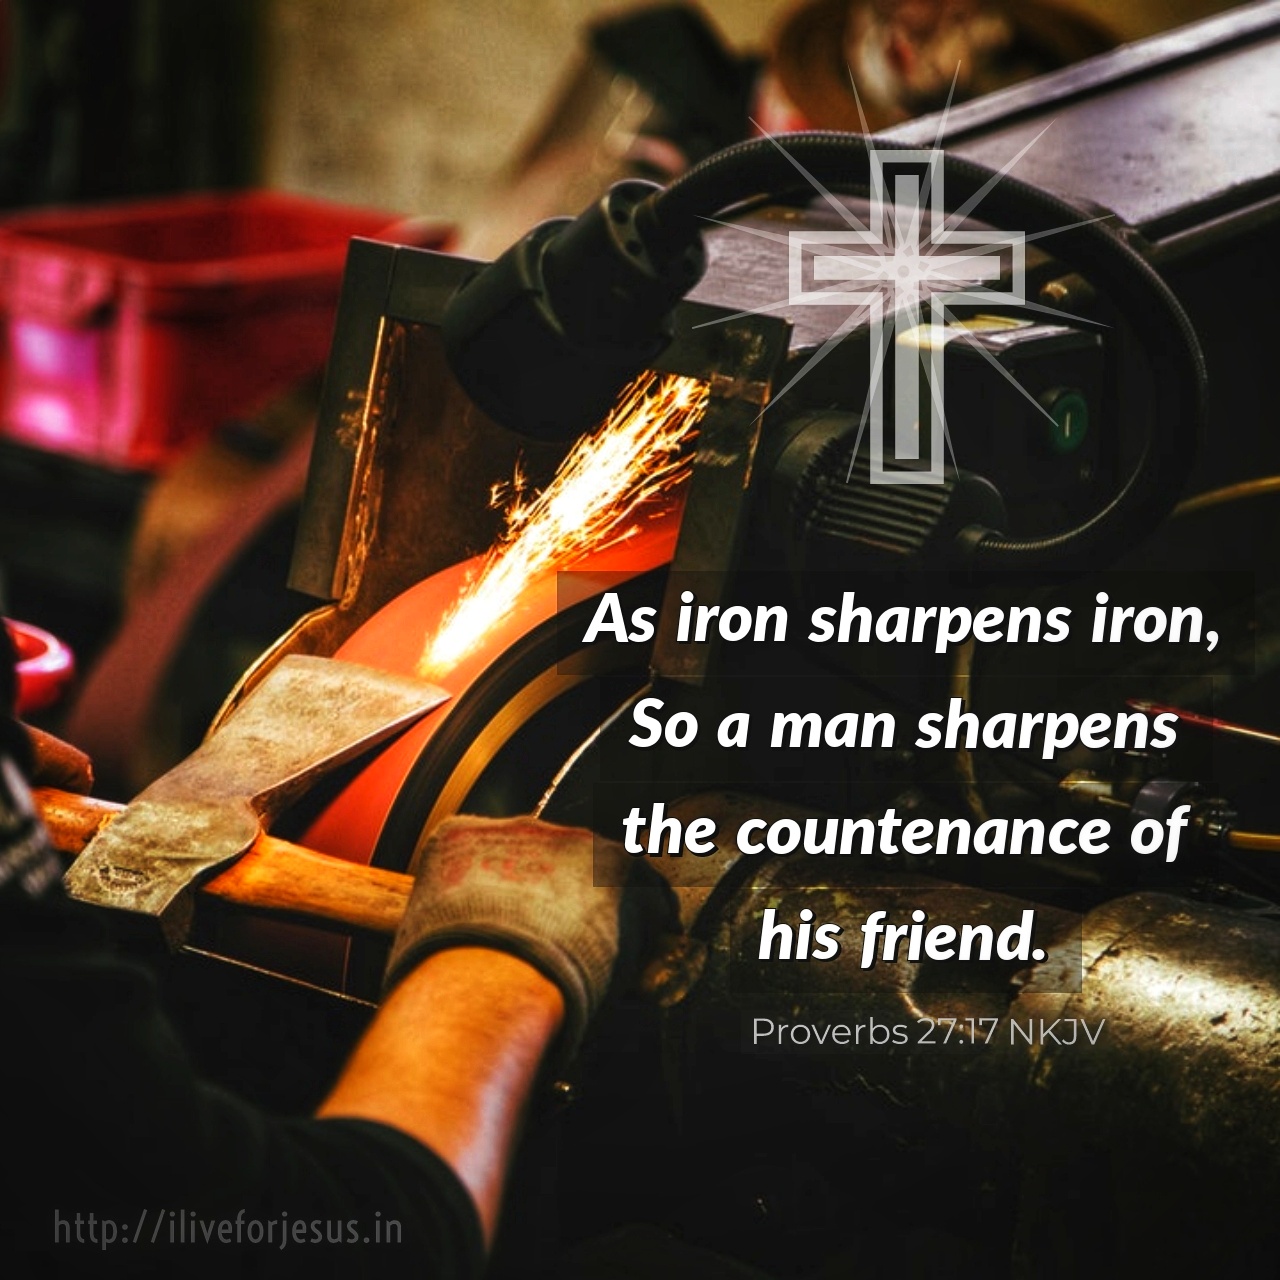 As iron sharpens iron, So a man sharpens the countenance of his friend. Proverbs 27:17 NKJV